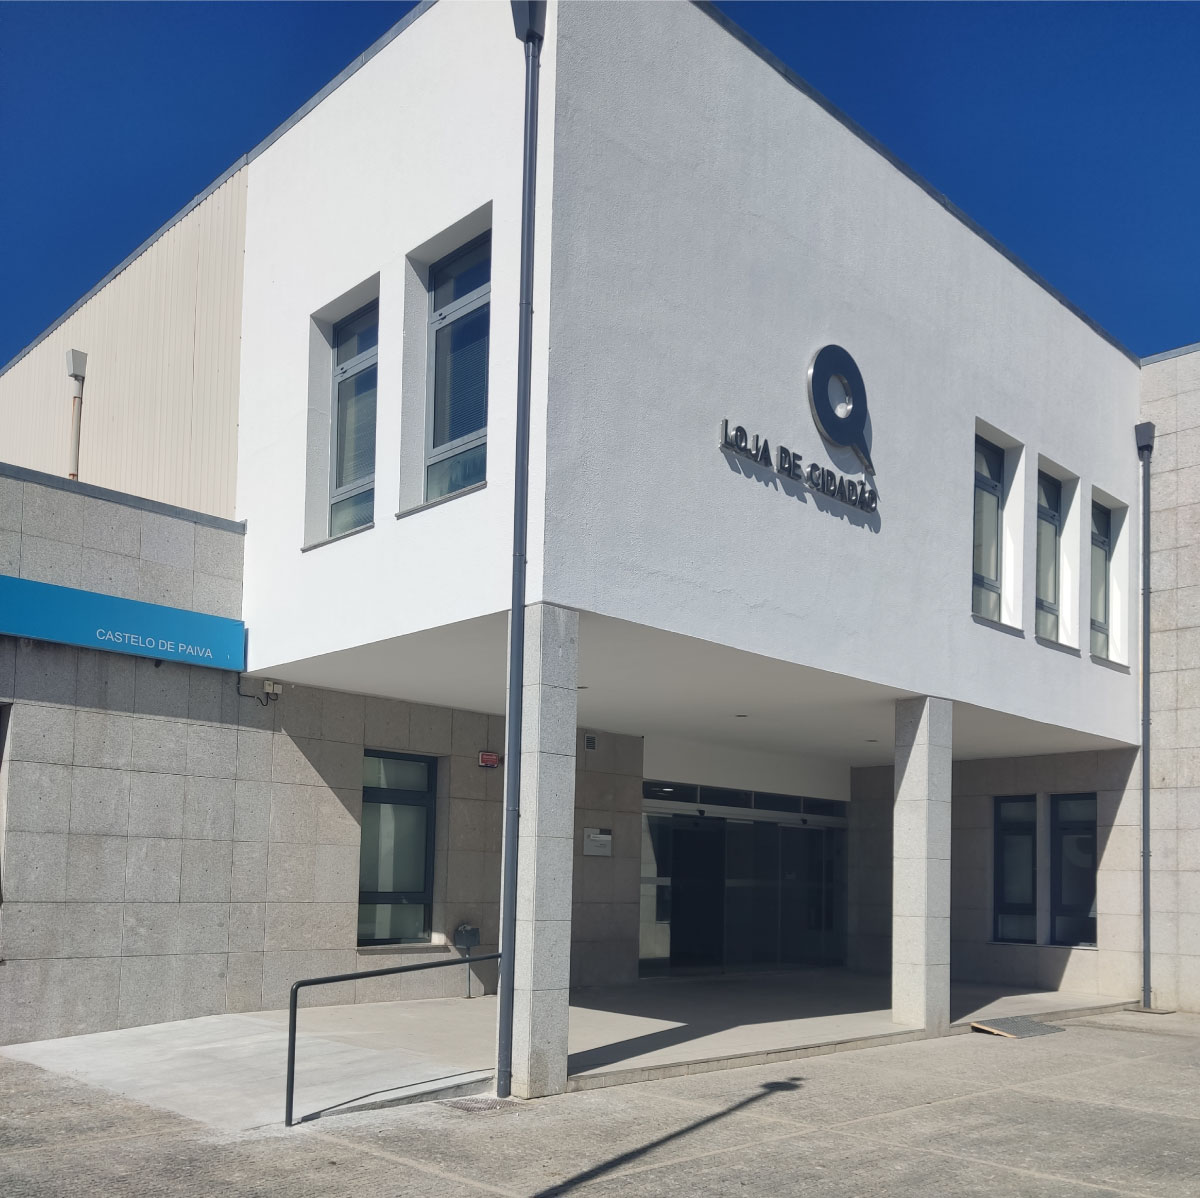 New Citizen Store opens in Castelo de Paiva